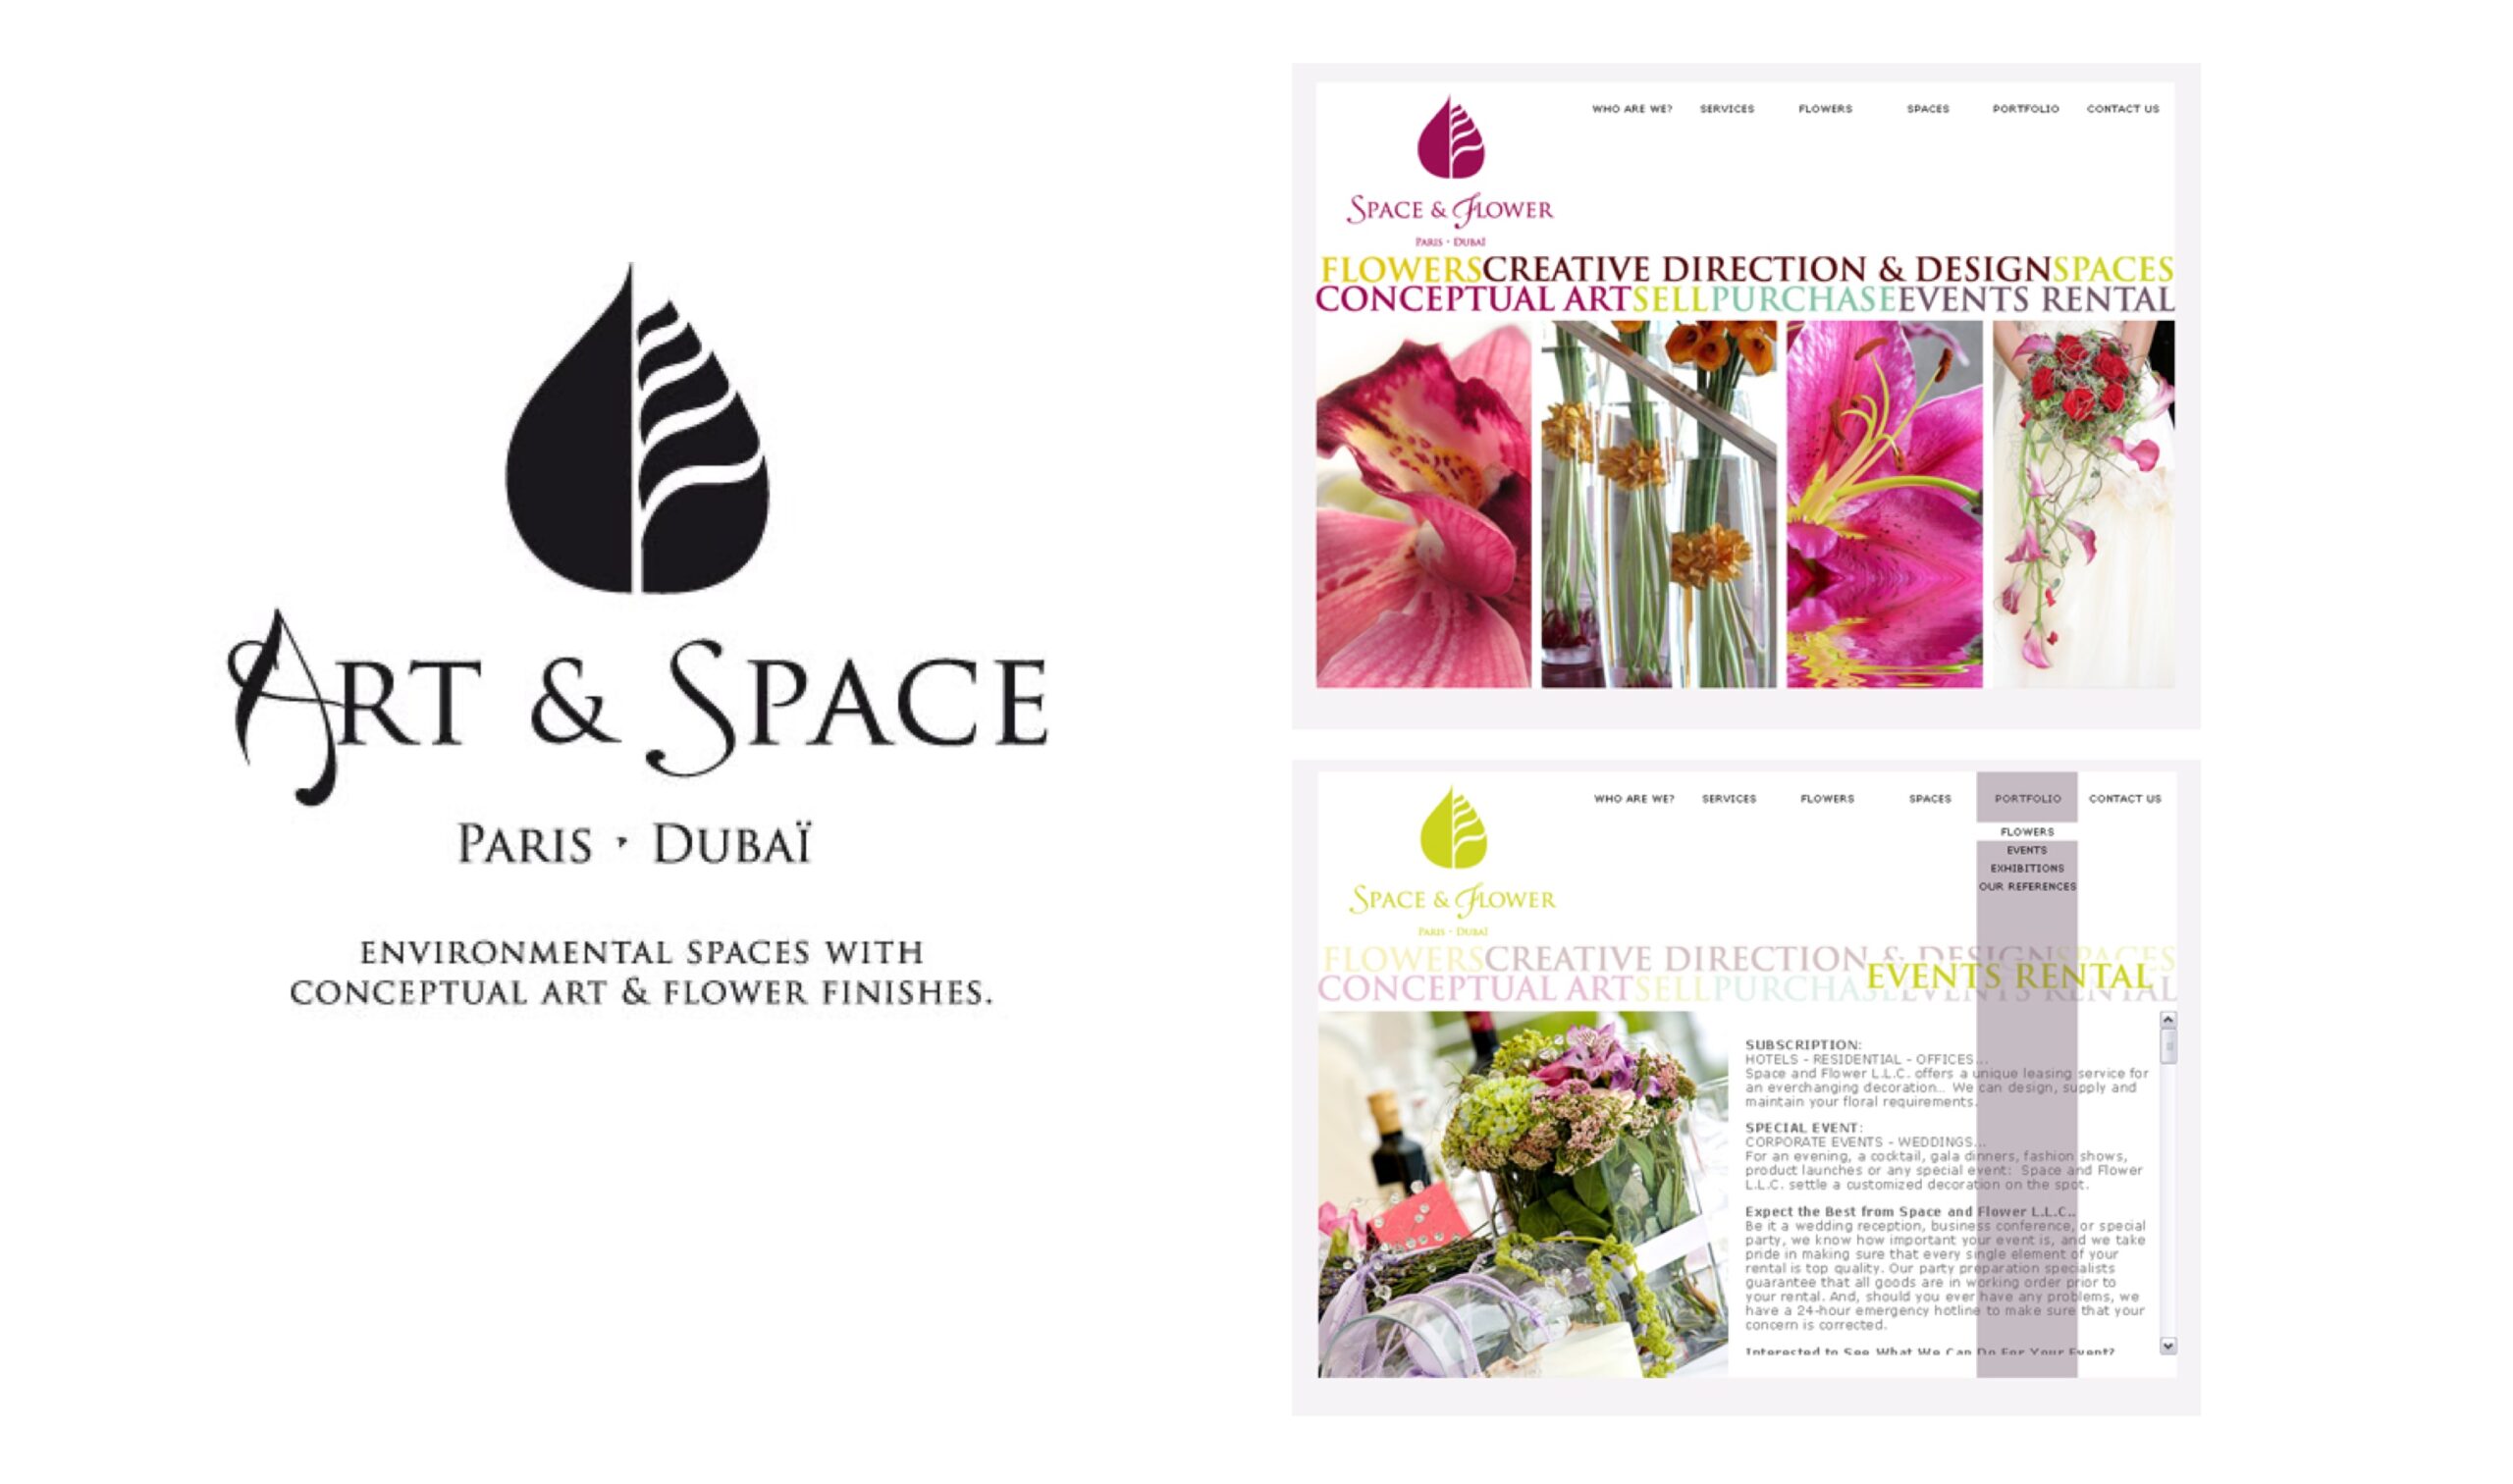 Space & flower, floral design & event stylist - luxury wedding in uae & france.